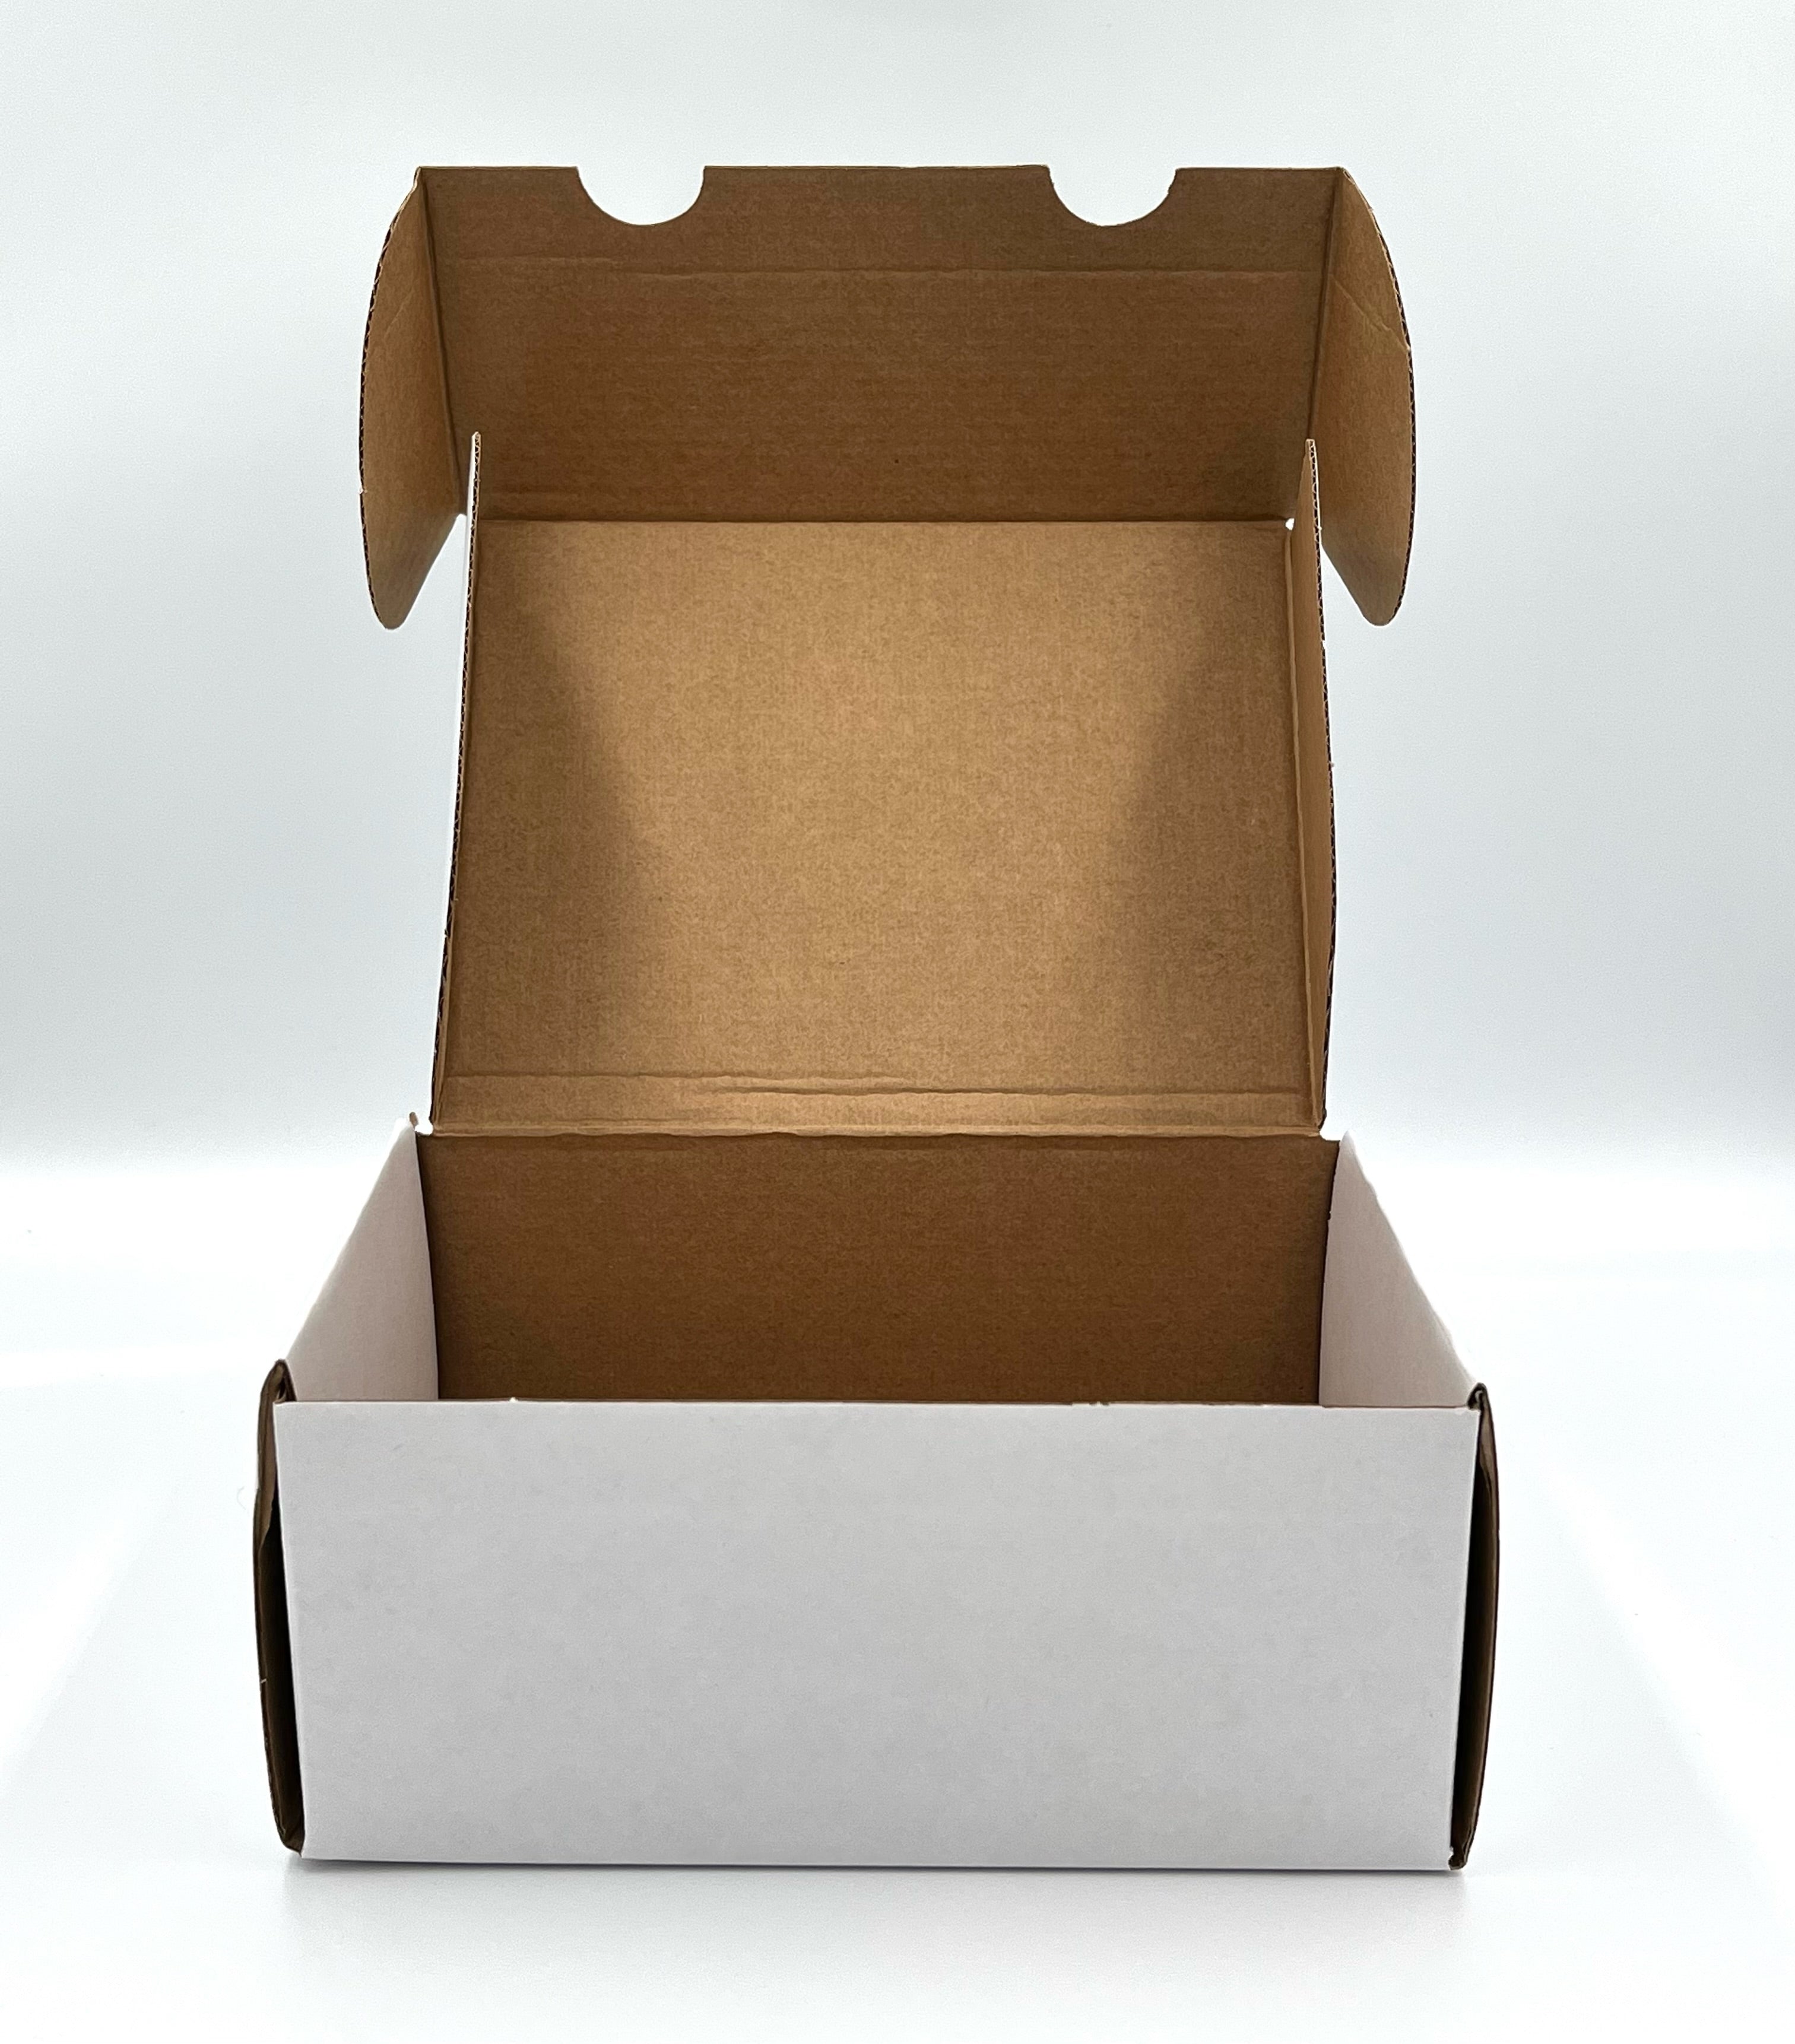 Ecopack e-commerce box - digital printing on predefined area